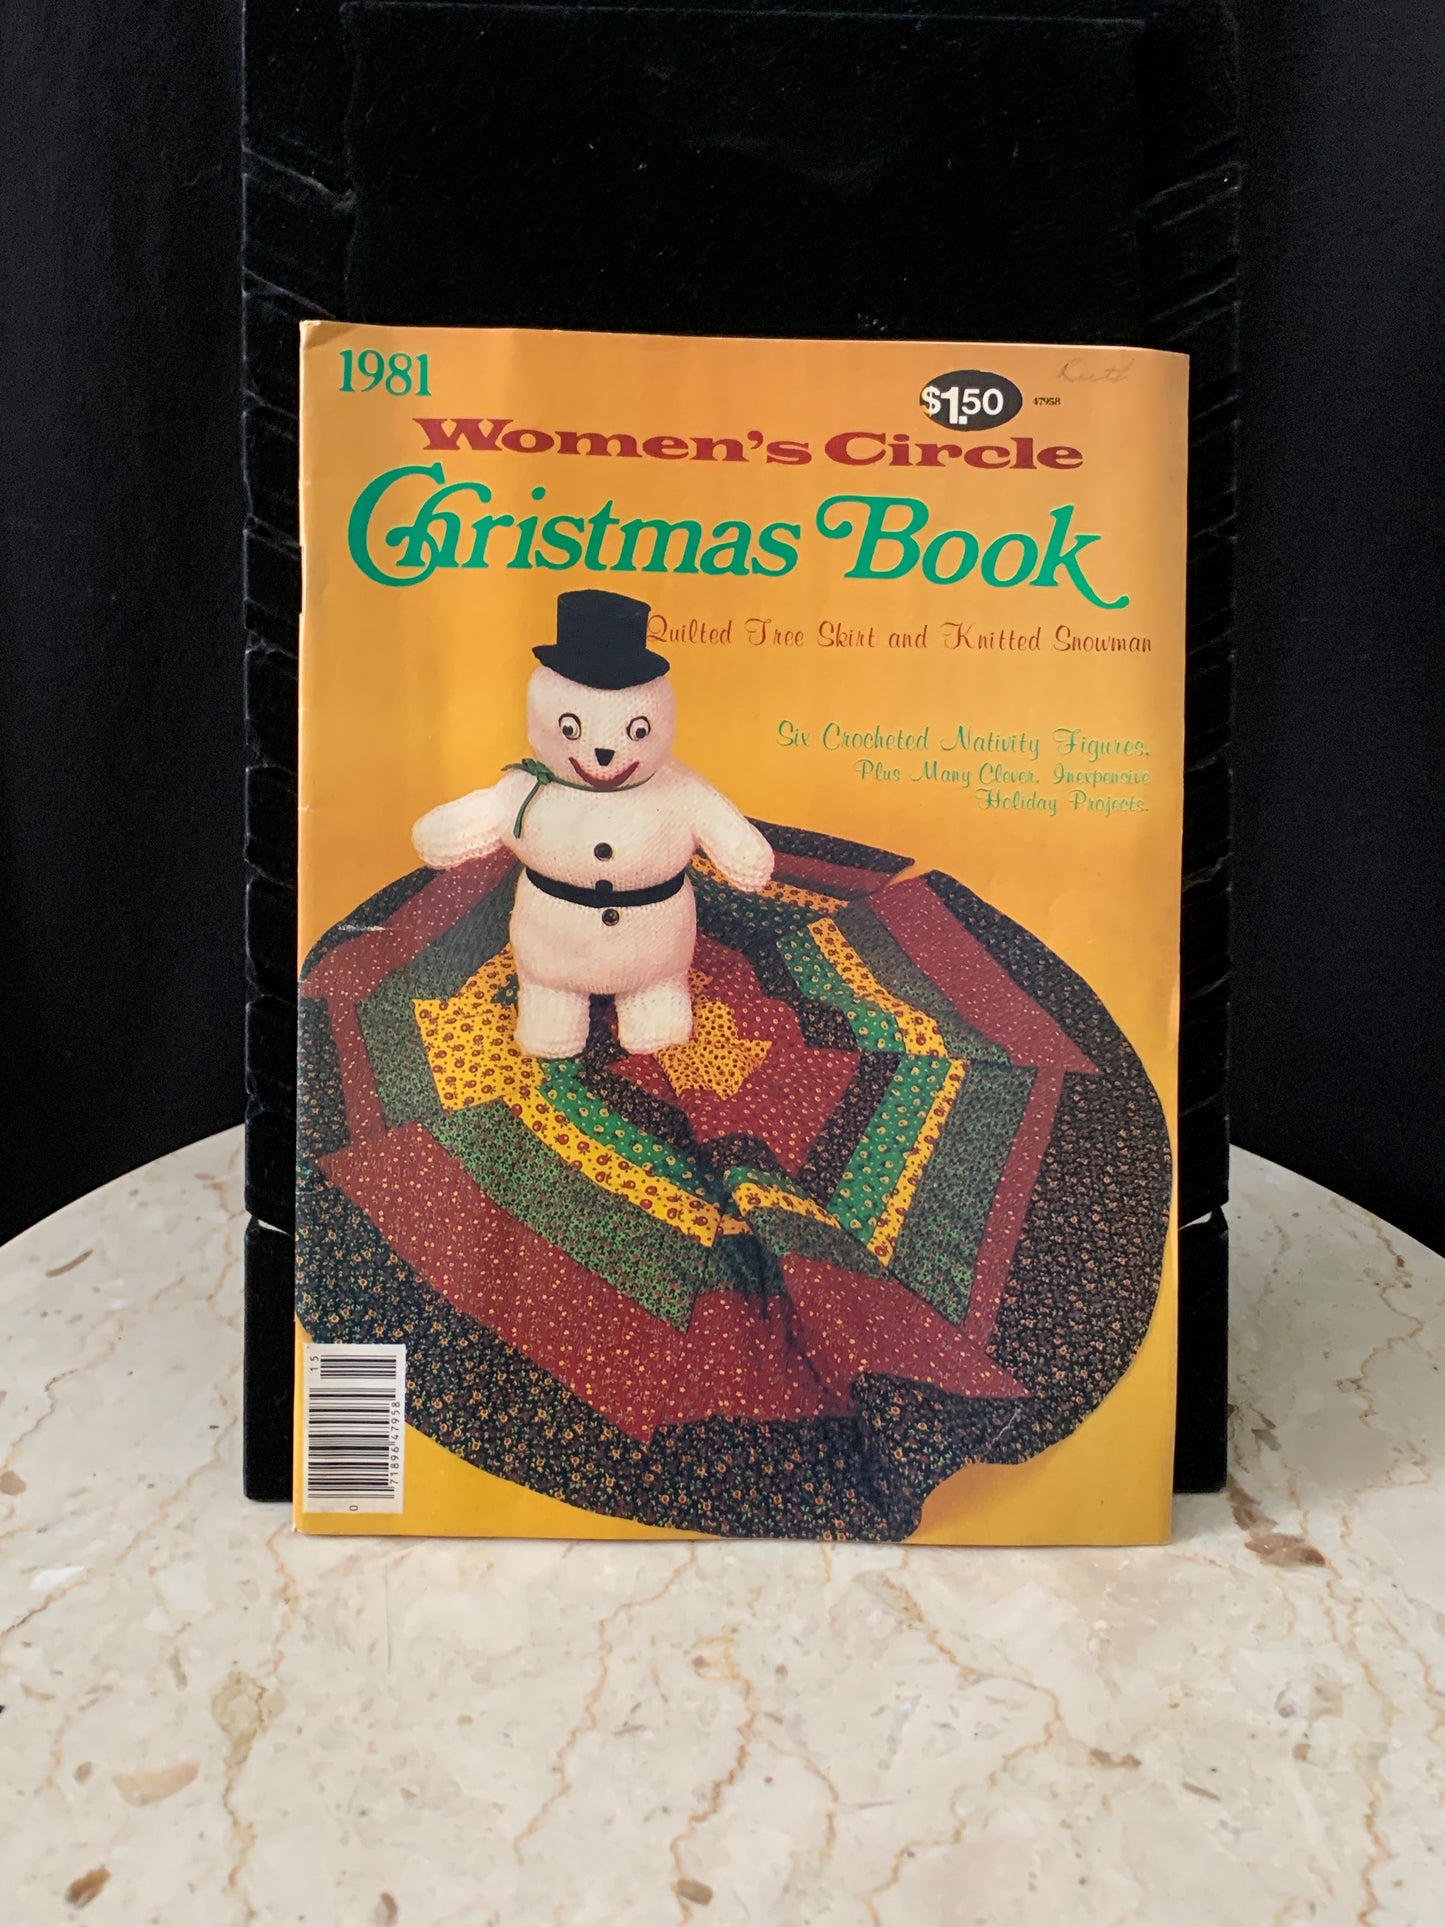 Vintage Christmas Craft Book Women’s Circle 1981